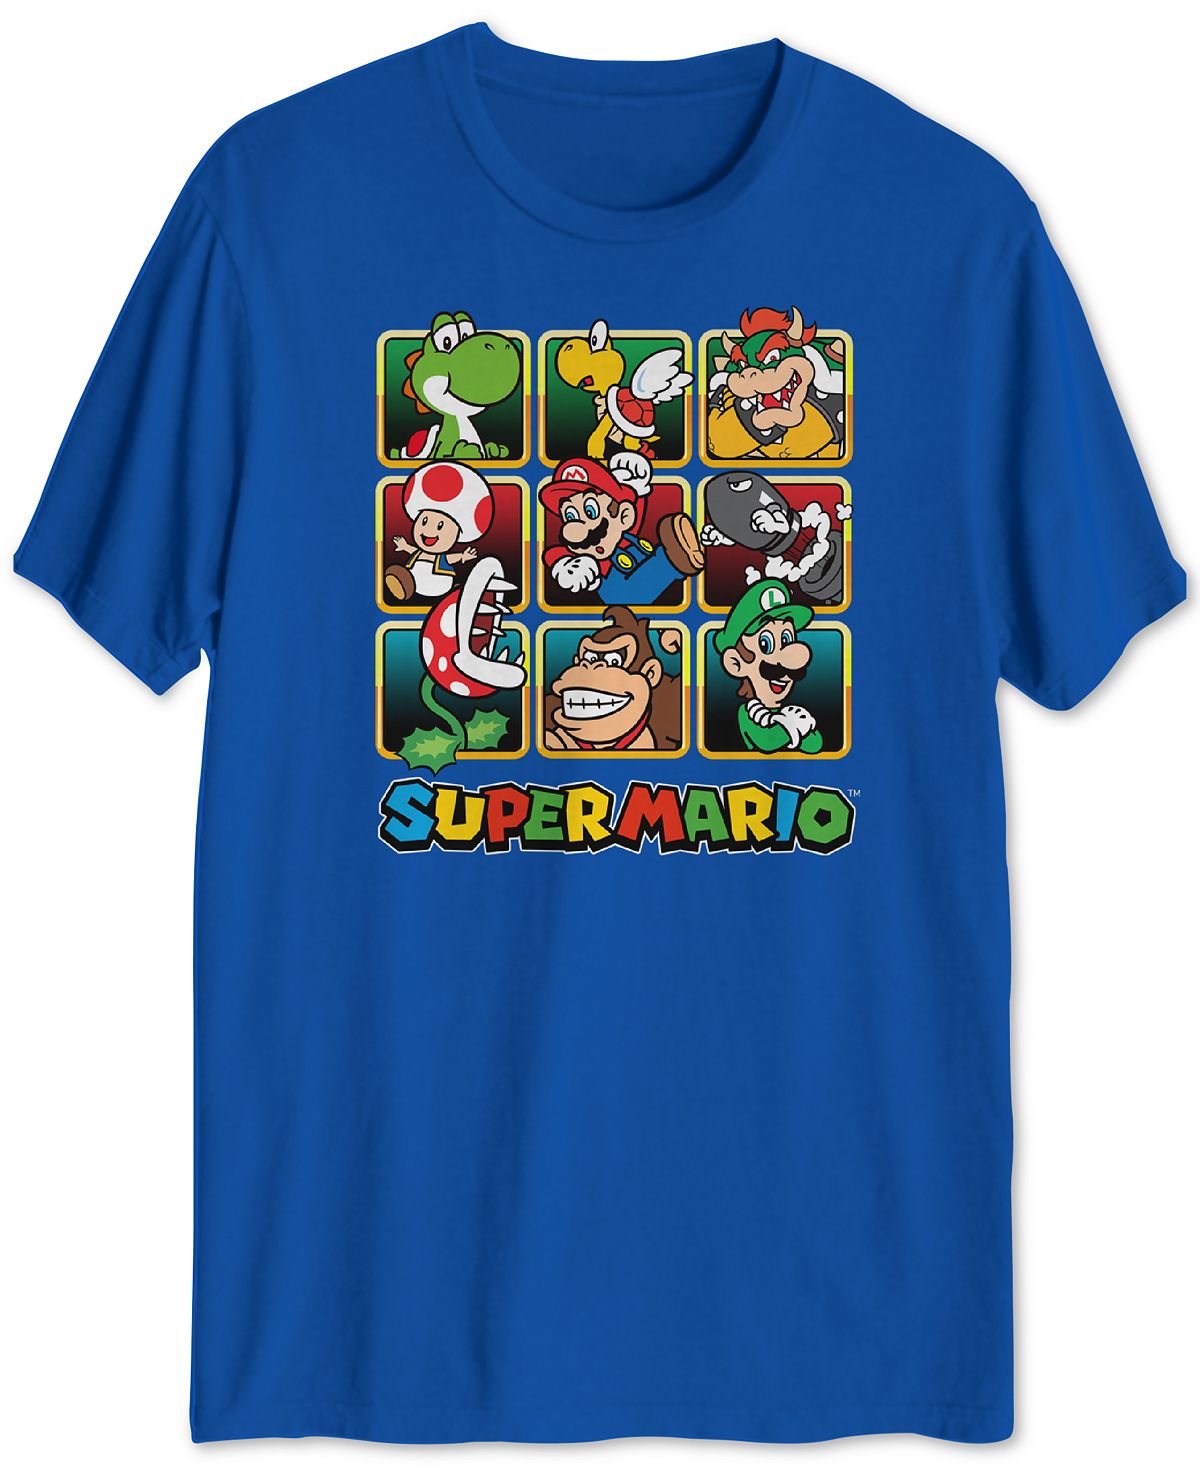 Hybrid Super Mario Golden Box Graphic T-shirt Royal